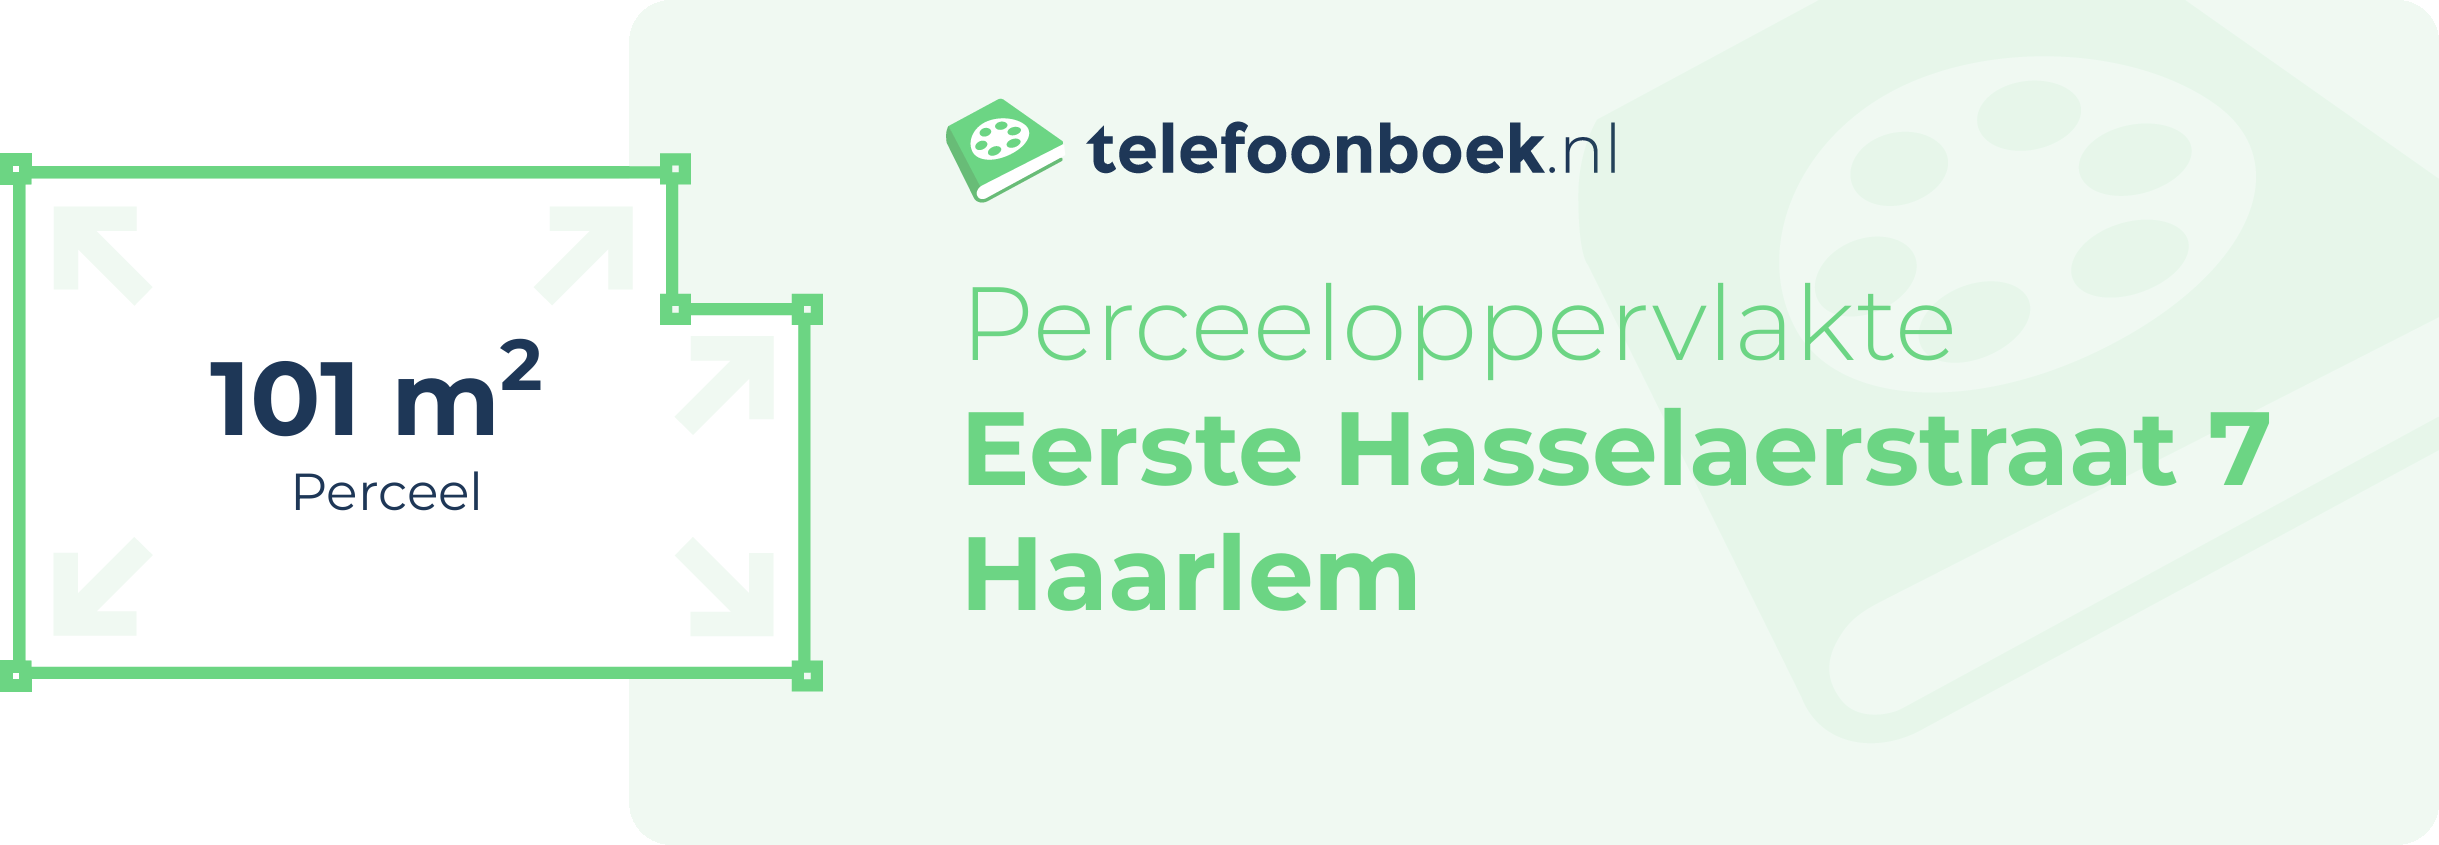 Perceeloppervlakte Eerste Hasselaerstraat 7 Haarlem